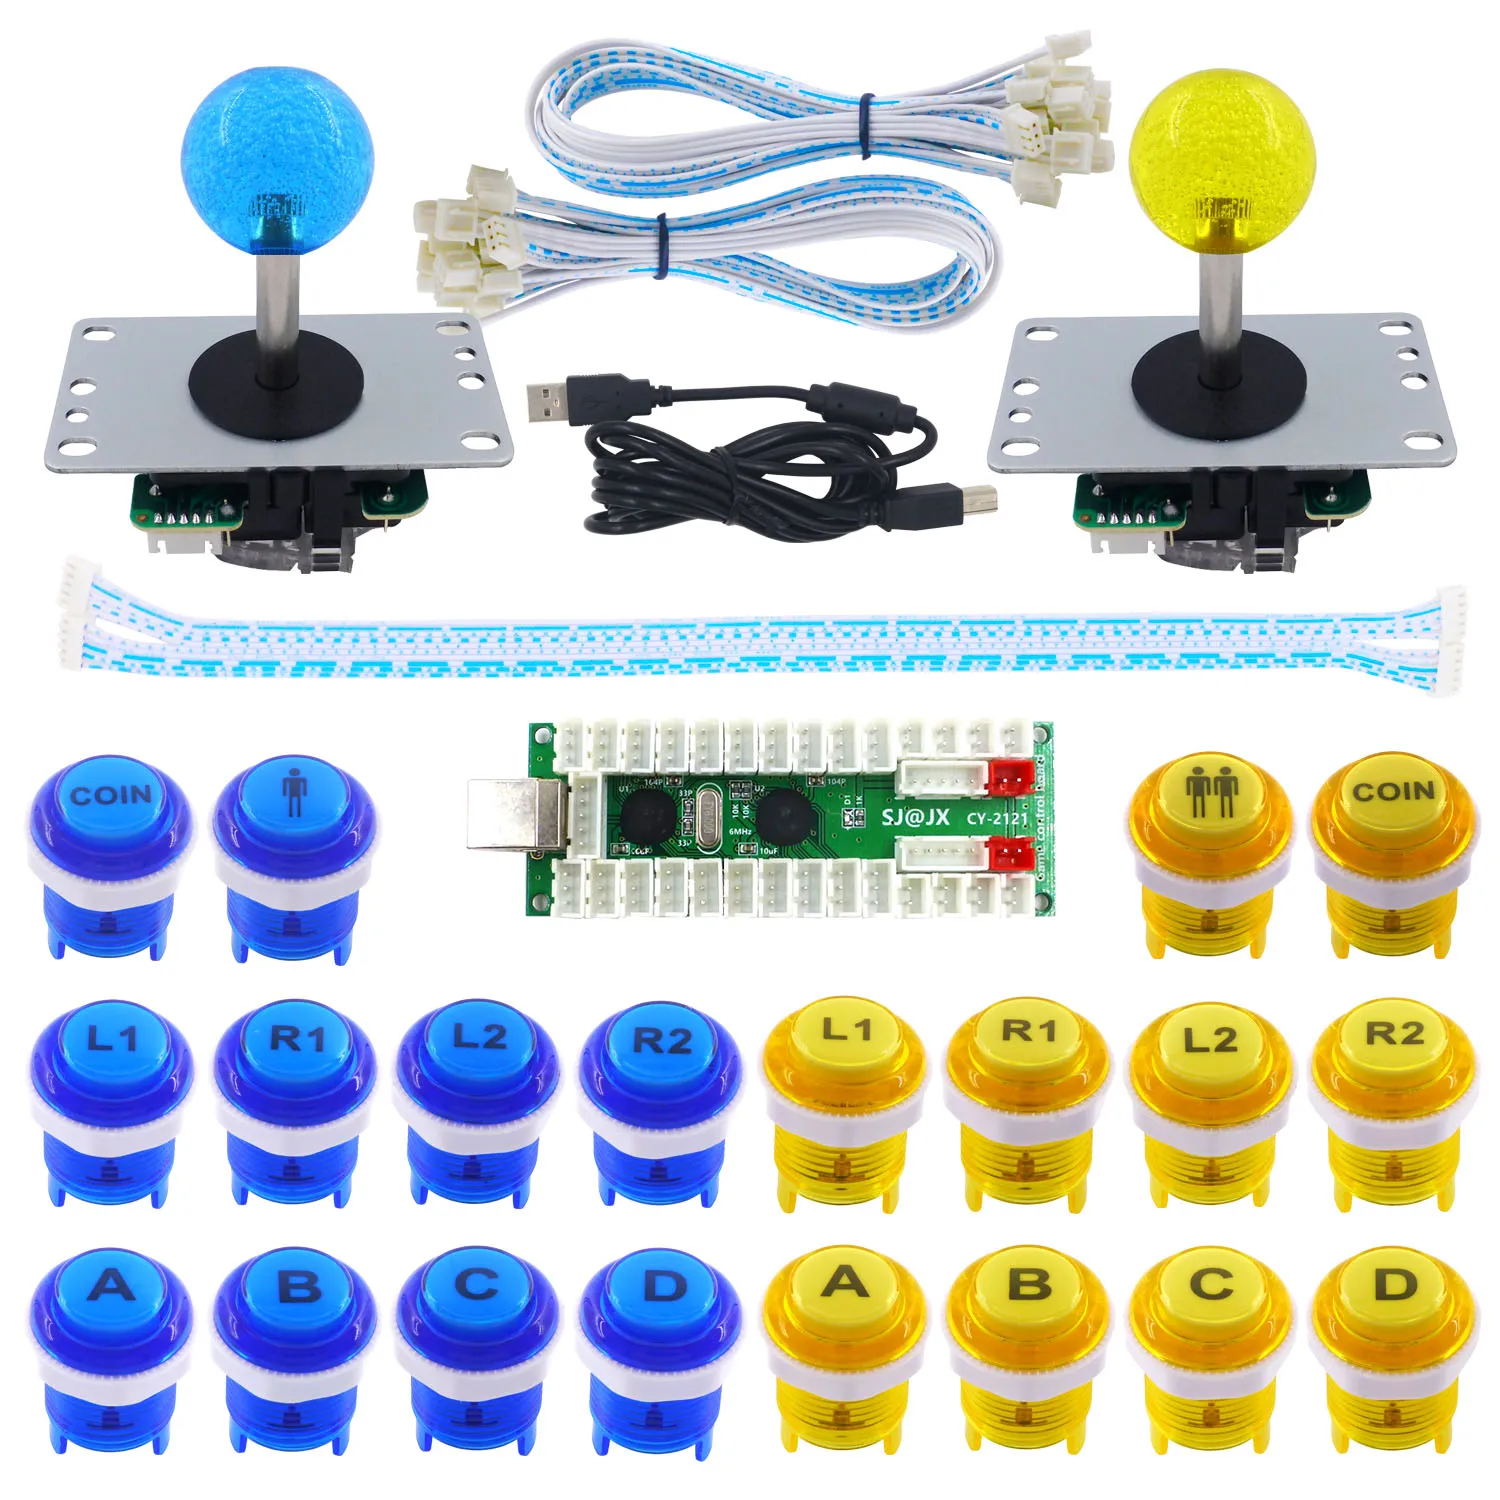 SJ@ JX 2 игрока Аркада DIY Kit светодиодный кнопки контроллера 8 джойстик, usb-датчик для ПК MAME в ретро-стиле - Цвет: blue-yellow